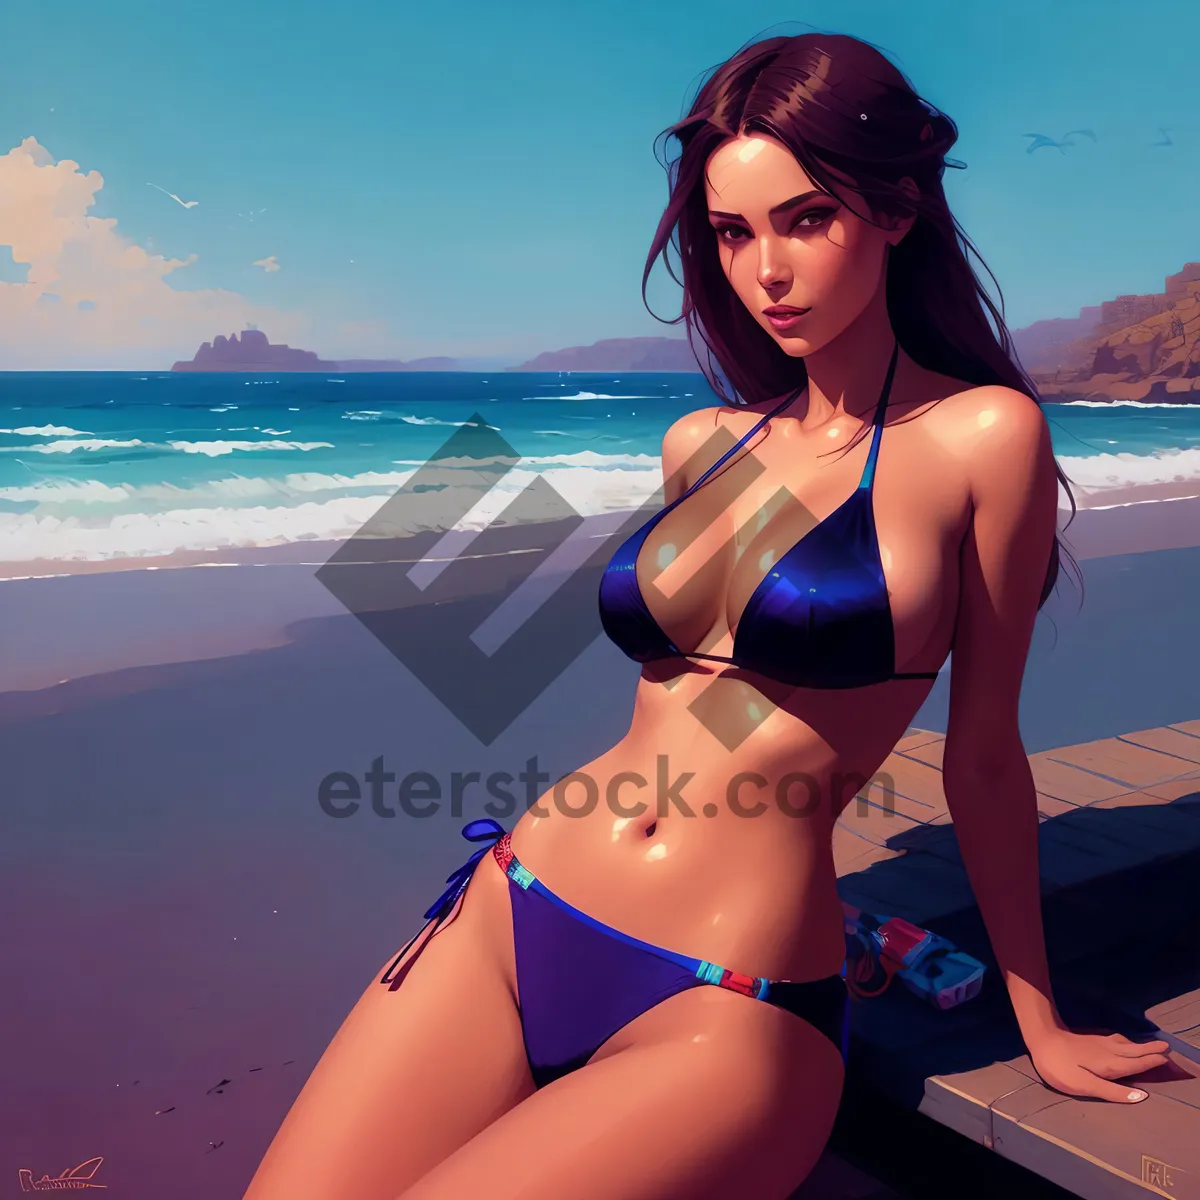 Picture of Exquisite Seaside Escape with Sensational Swimwear.